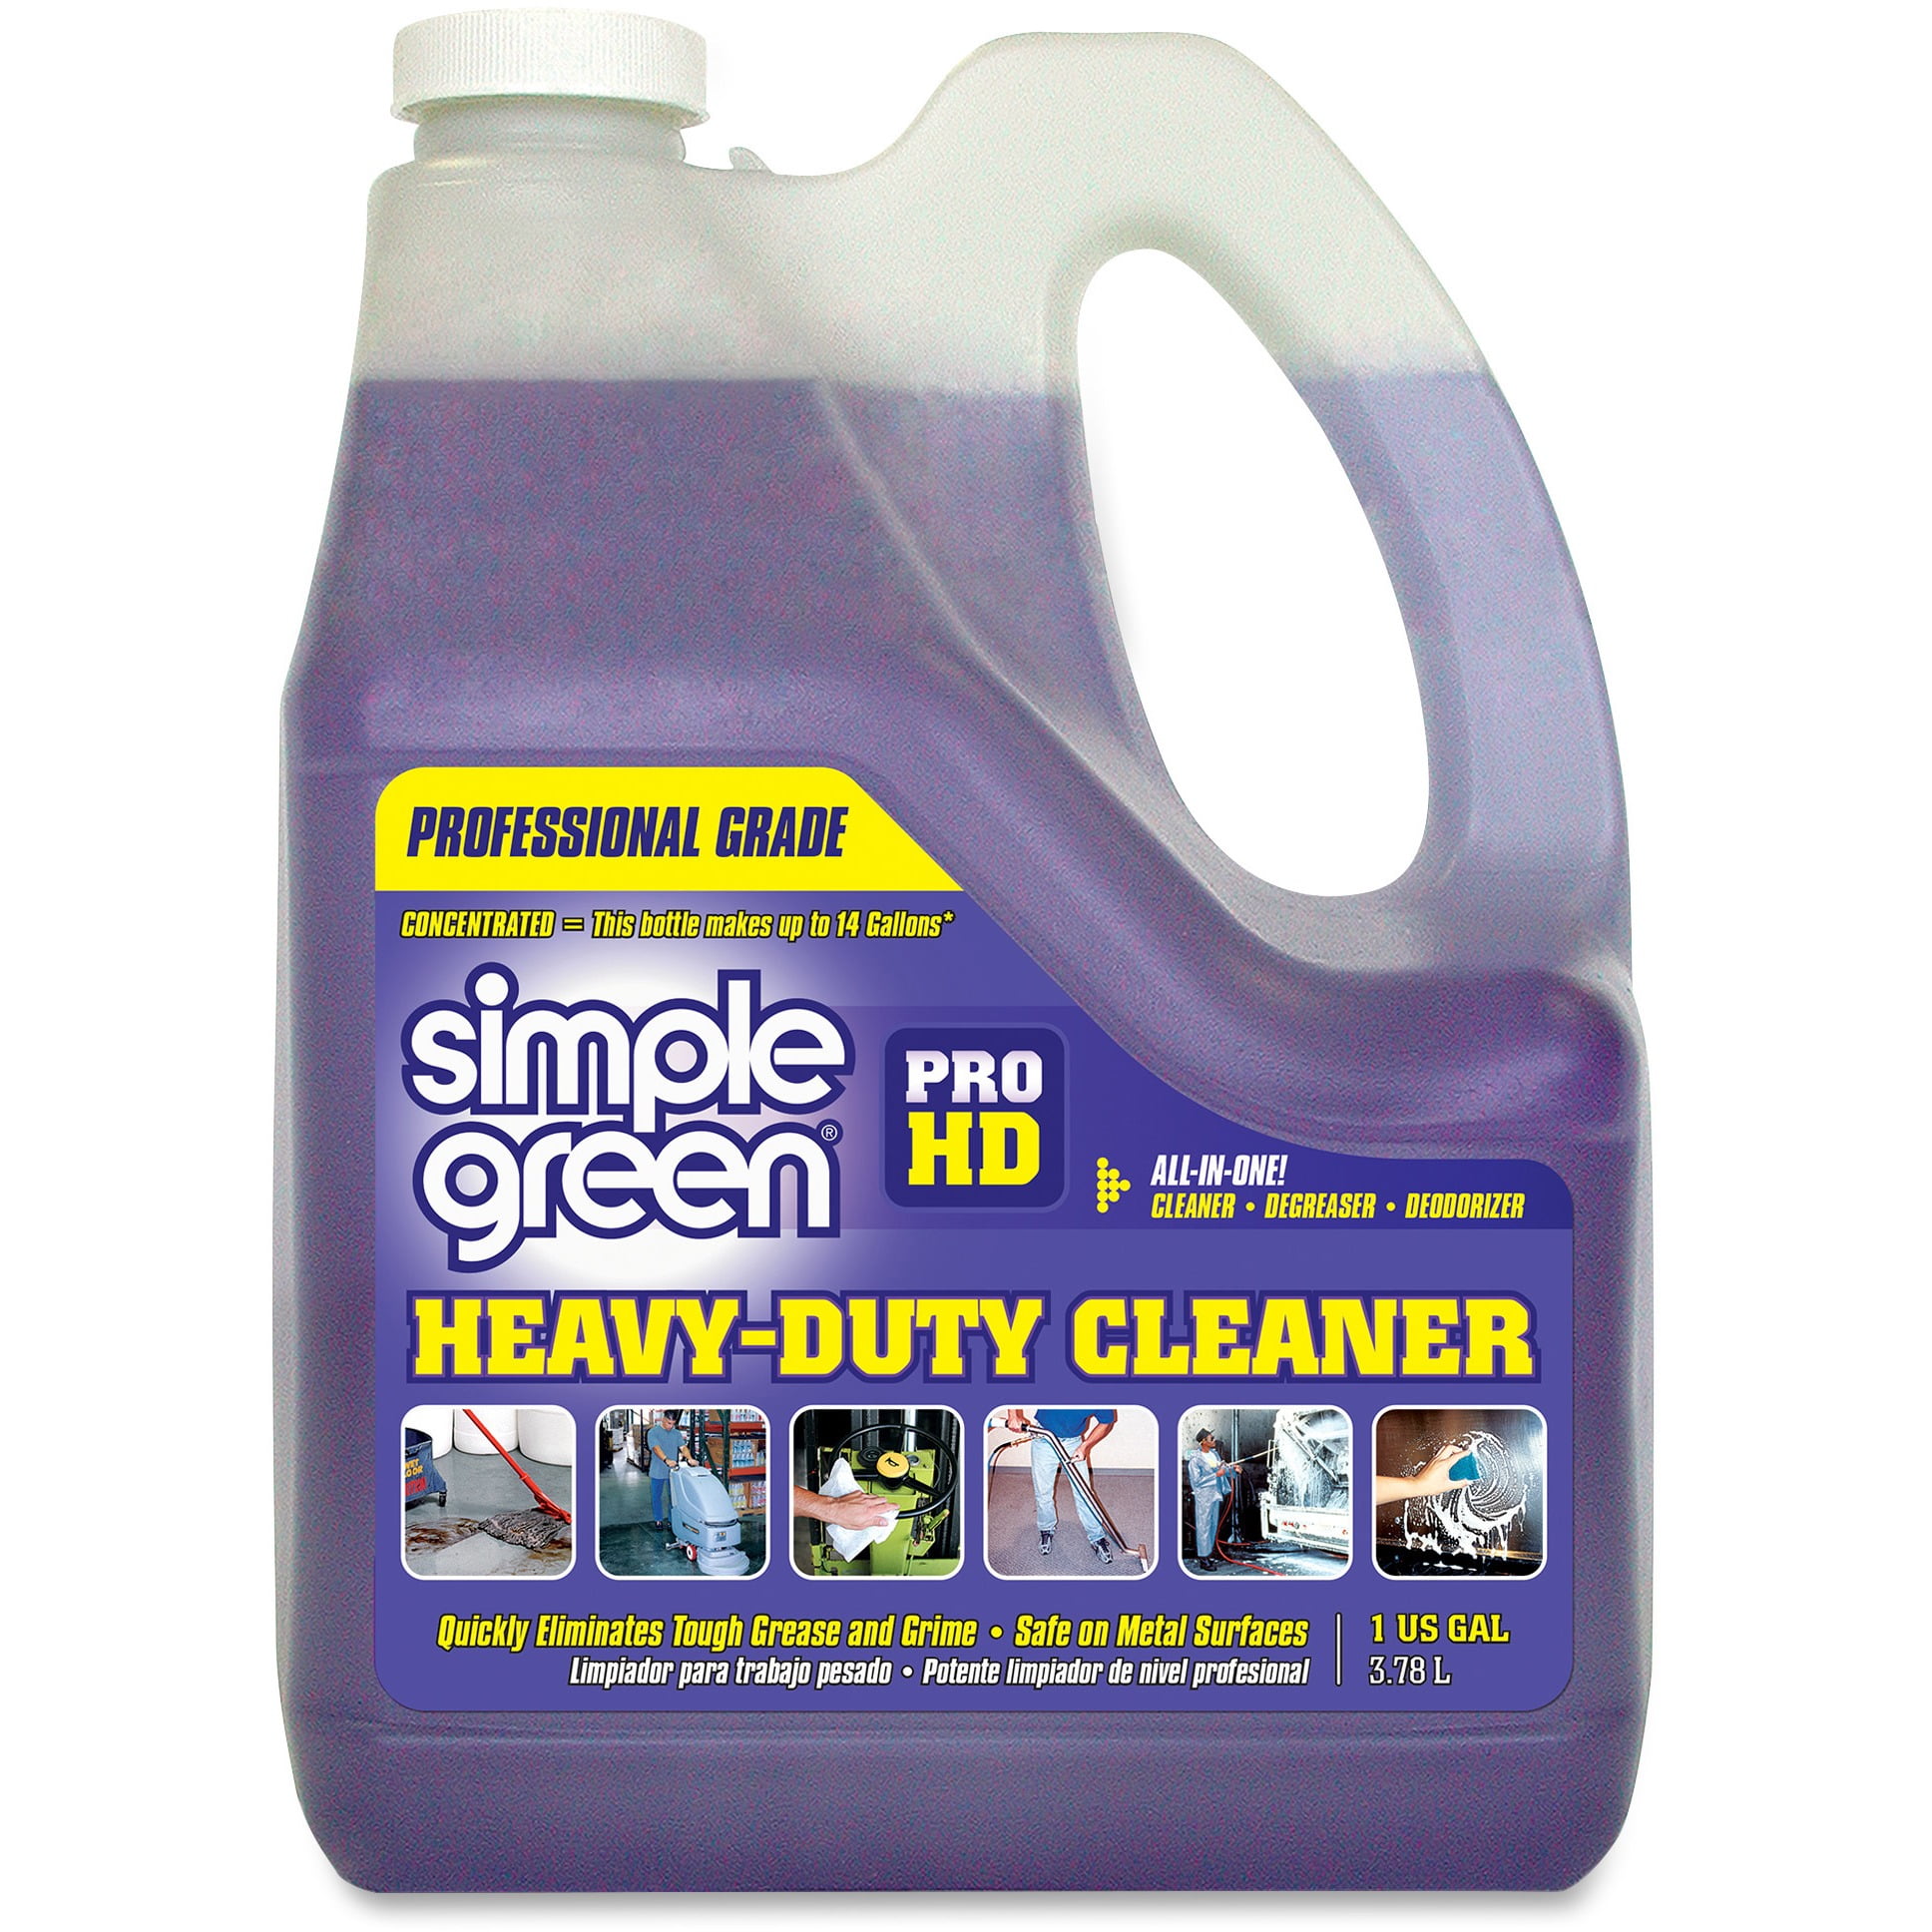 Simply pro. MAXICLEAN (Heavy Duty clean). Duties of Cleaners. Powerful Cleaner Pro. Heavy Duty Cleaner io e lode купить.